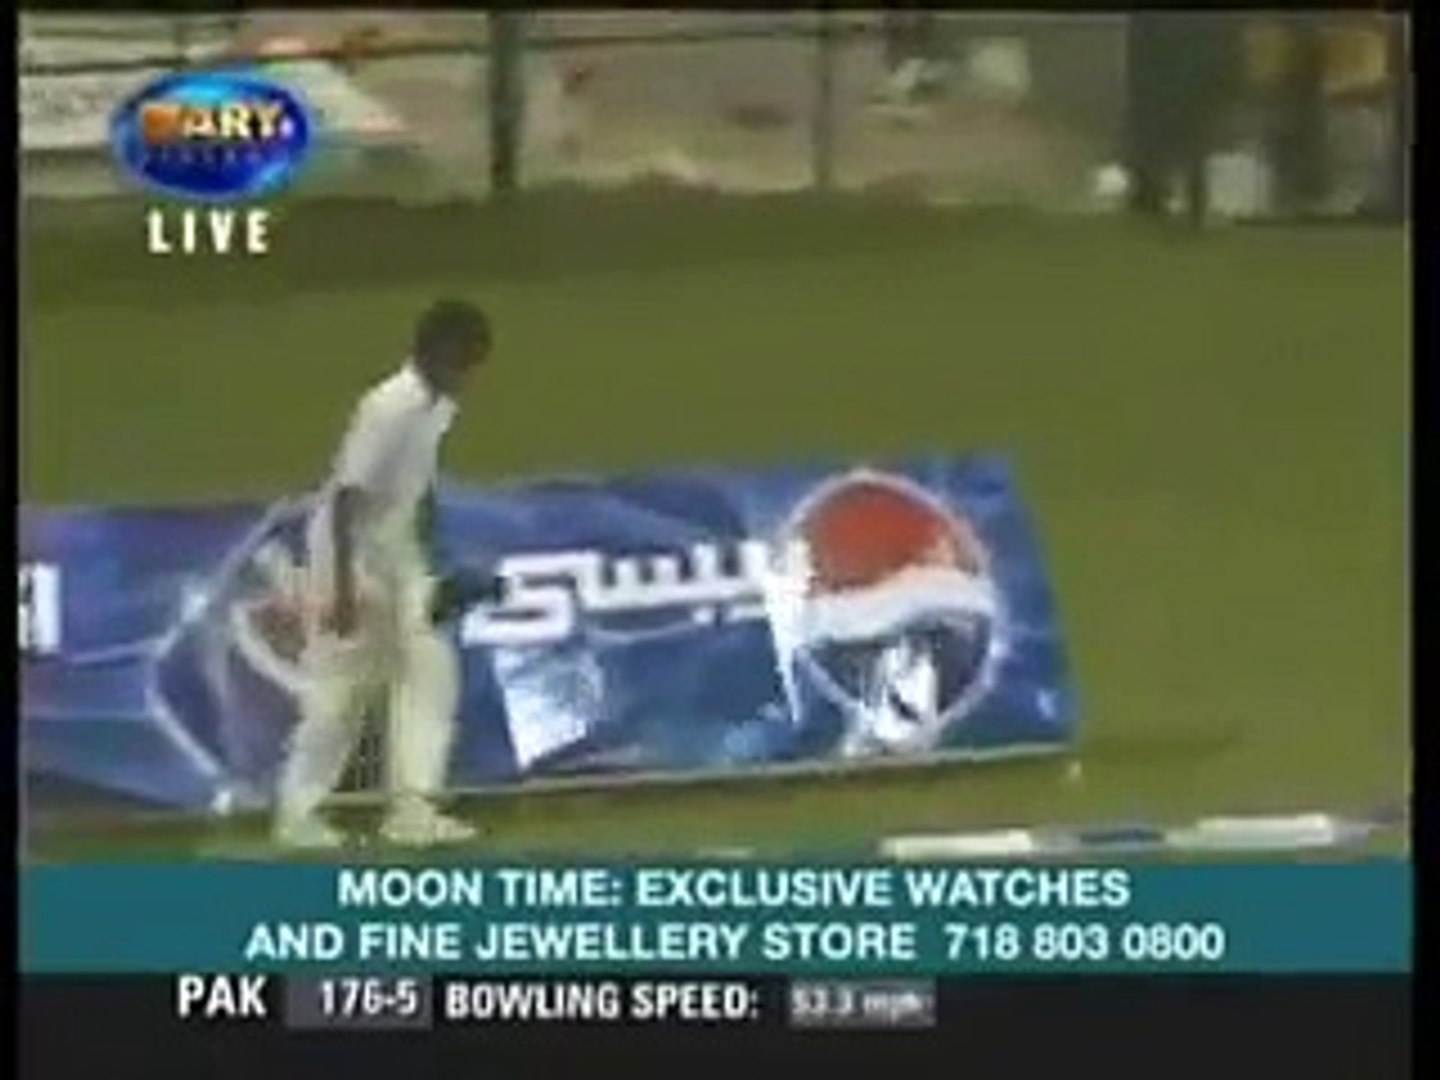 Cricket-Videos -Shahid-Afridi-32-Runs-in-1-Over-Shahid-Afridi-Batting-Vs-Sri-Lanka-On-Fantastic- Videos